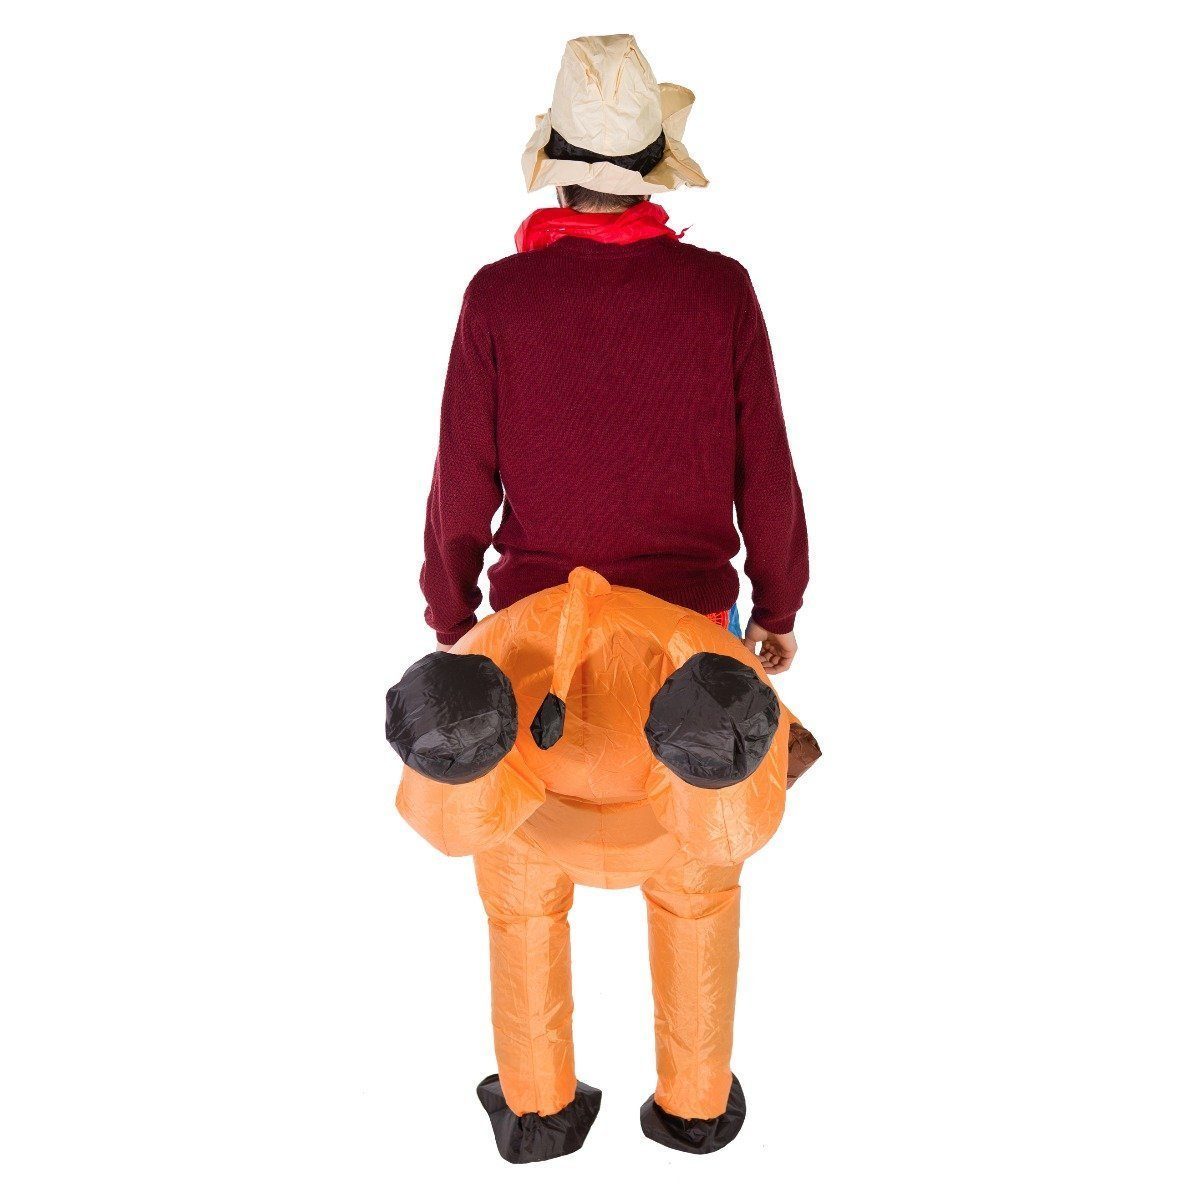 Fancy Dress - Inflatable Bull Costume